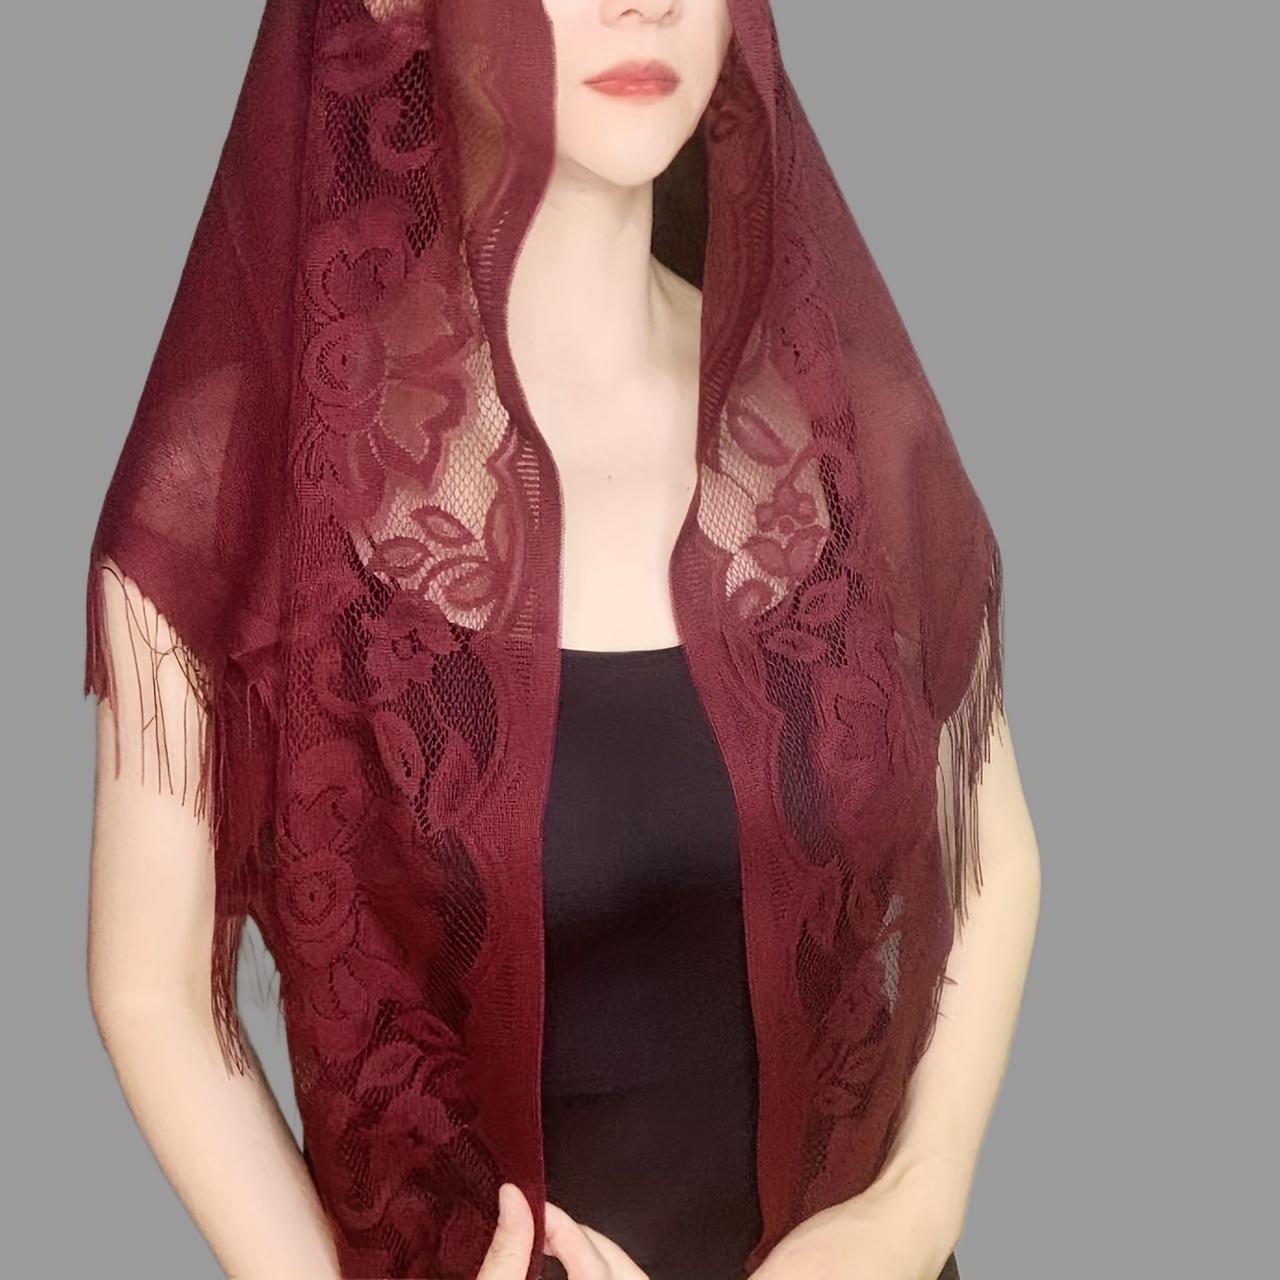 classic triangle lace veils tassel scarves vintage catholic veils mantilla head covering church veil for women